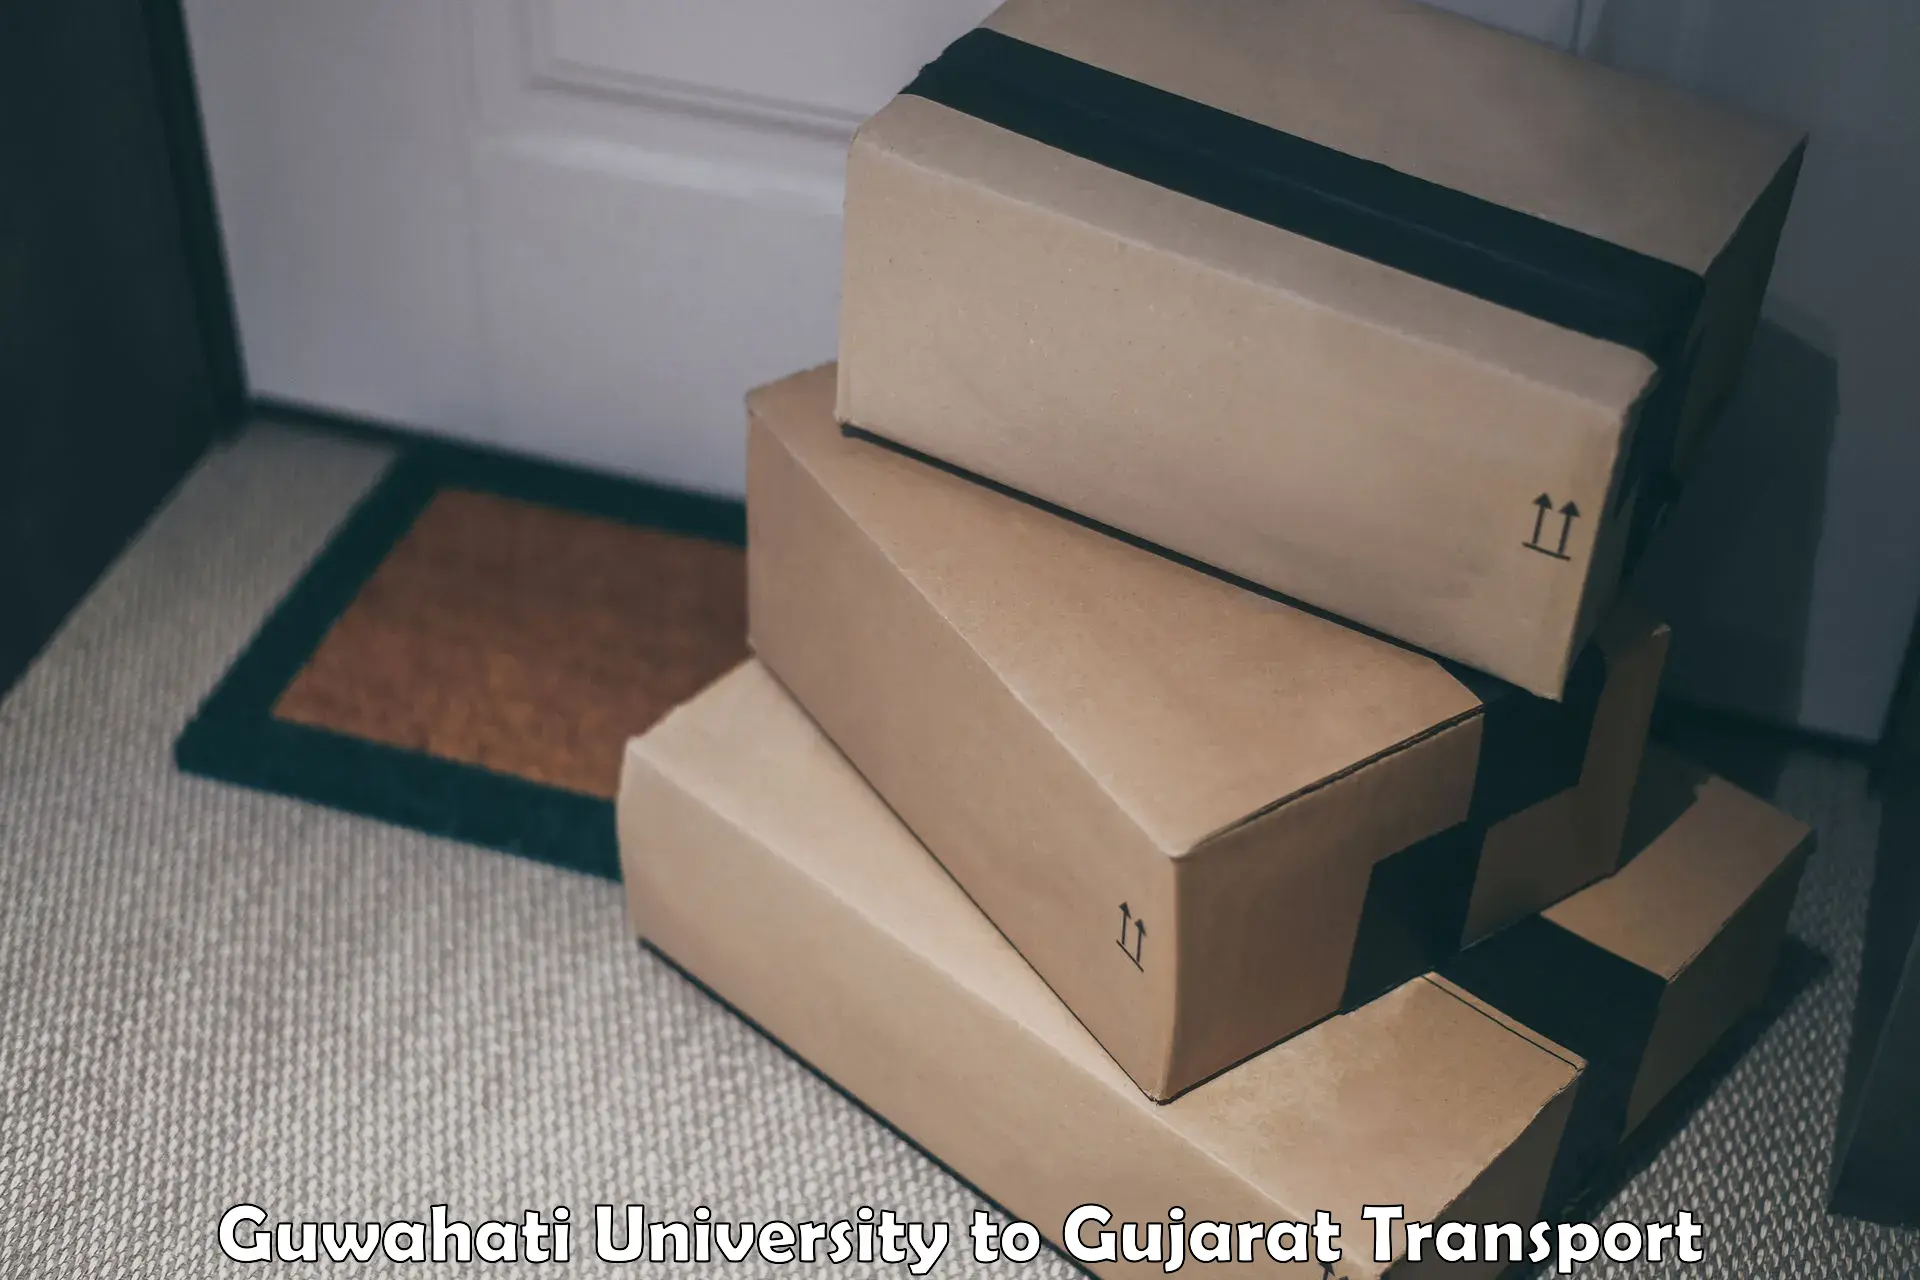 Truck transport companies in India Guwahati University to Veraval